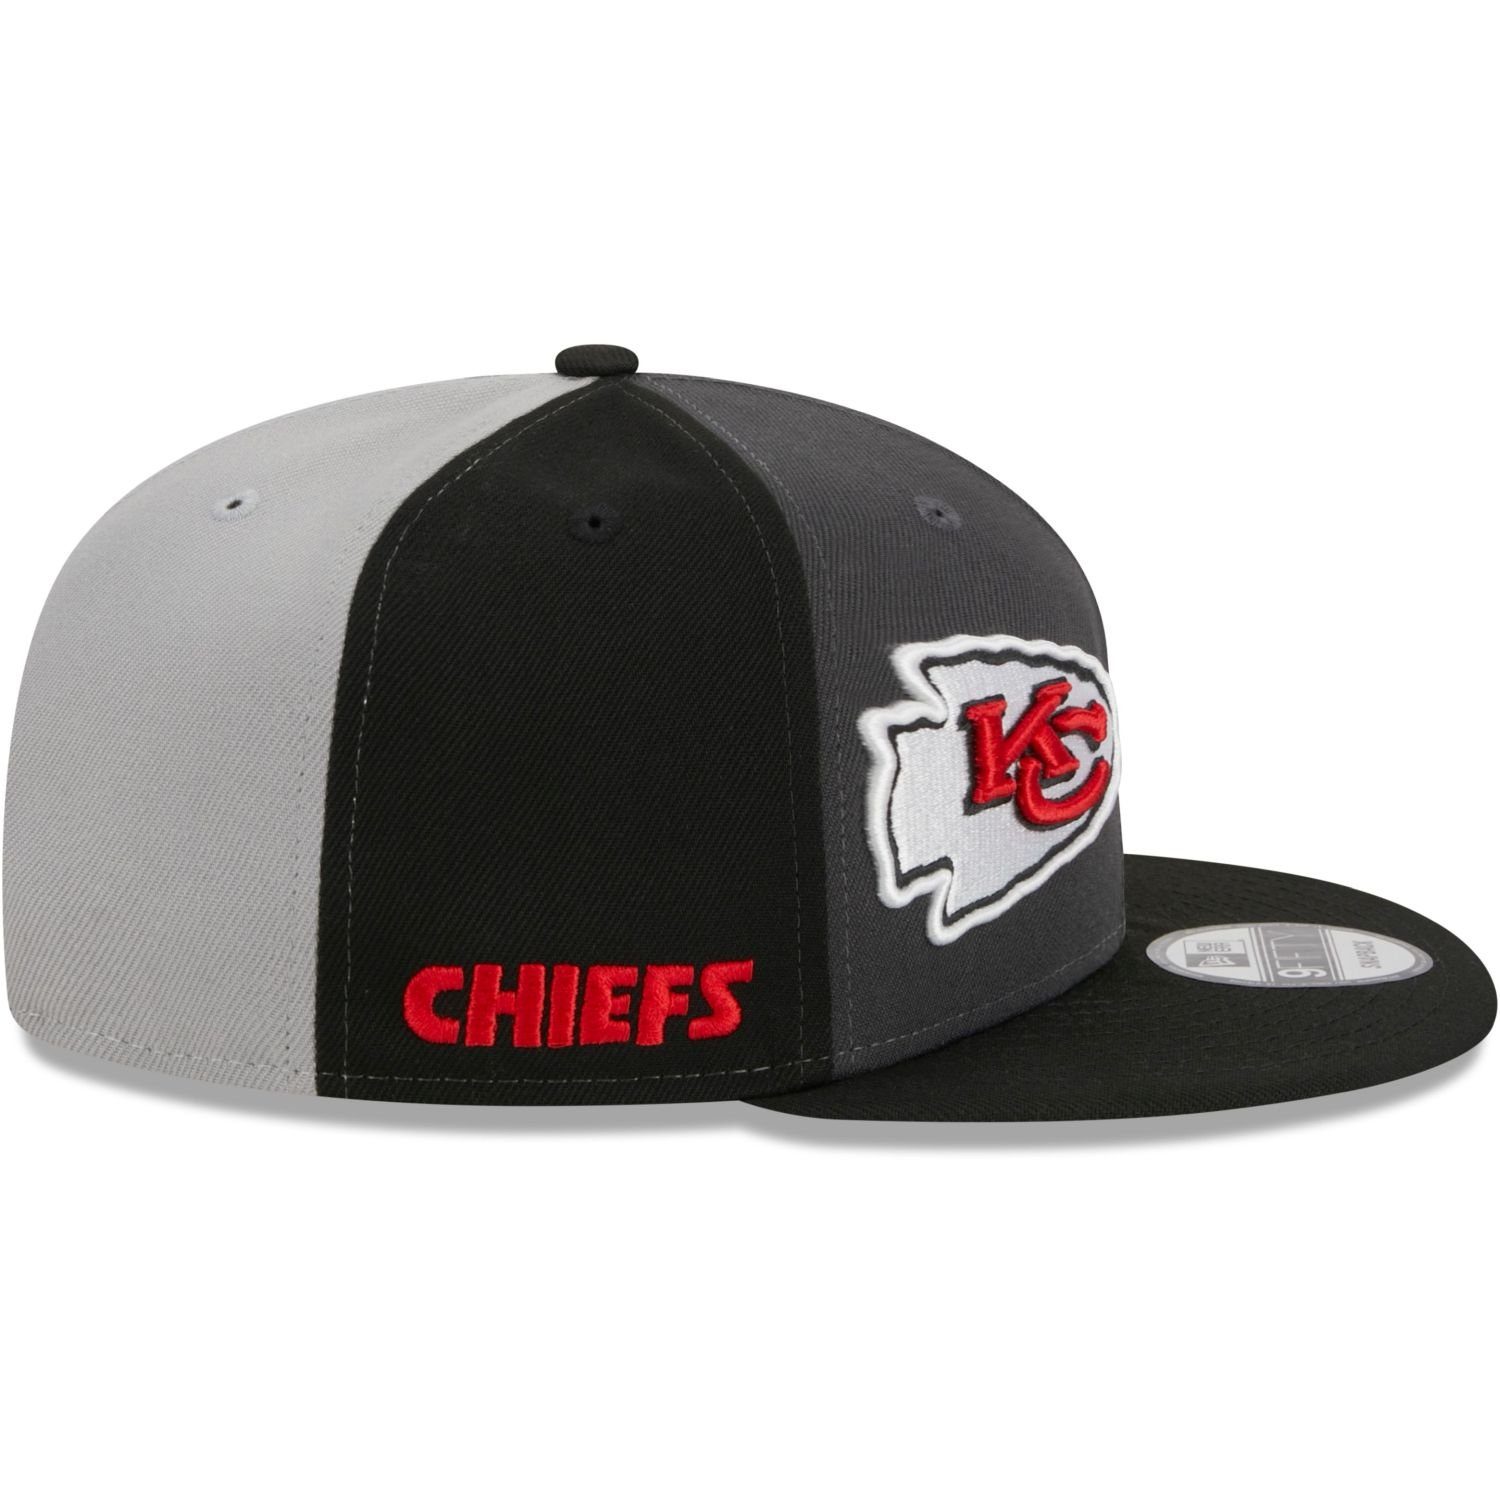 Sideline Kansas Chiefs 9Fifty Cap New Snapback City Era